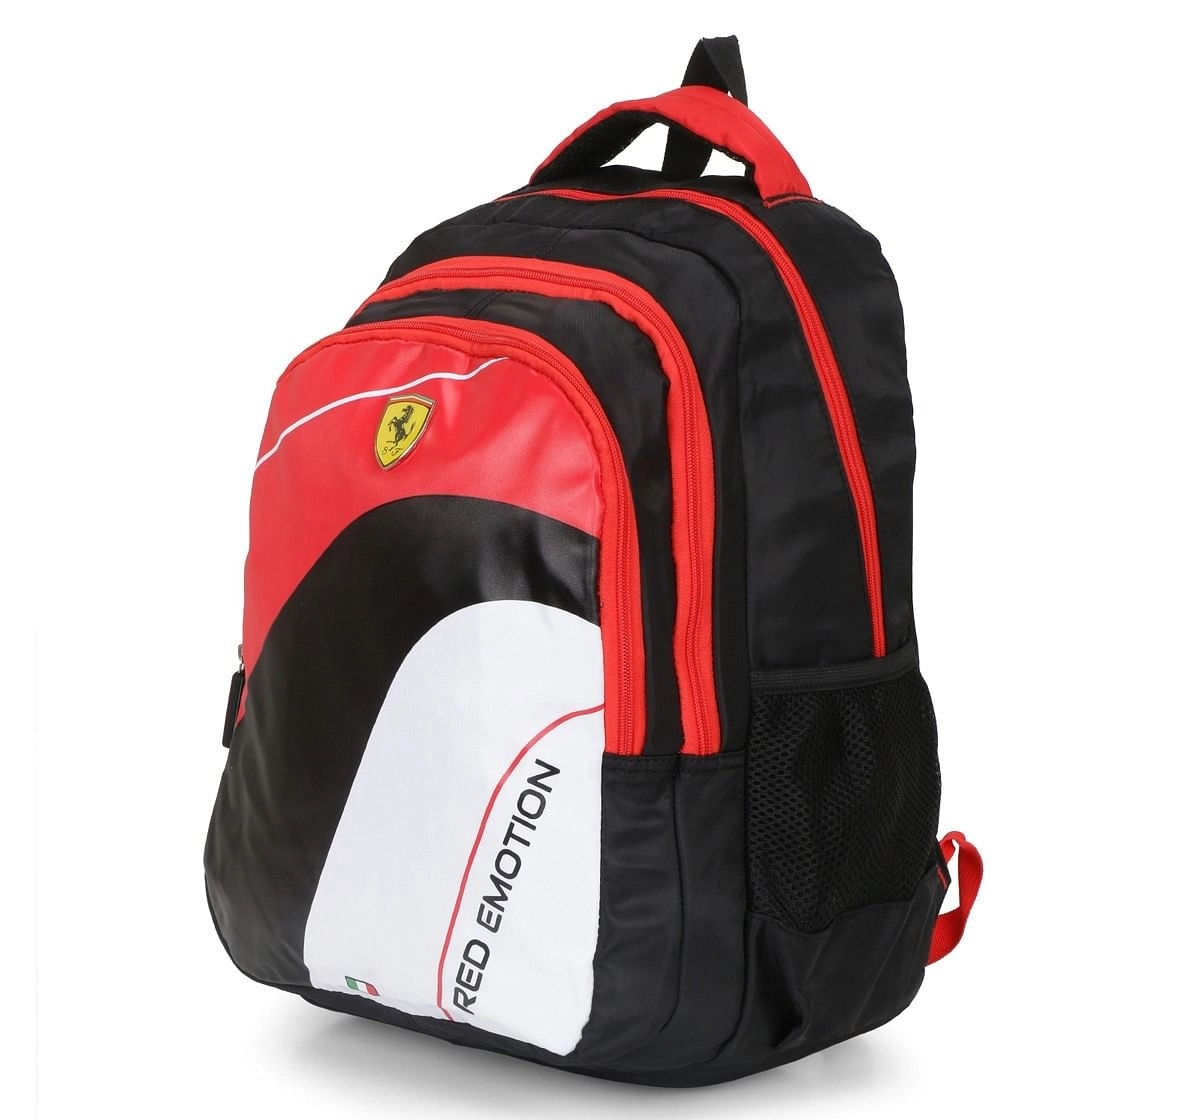 Ferrari Red Emotion 17 Backpack School bags for kids Multicolor 3Y+